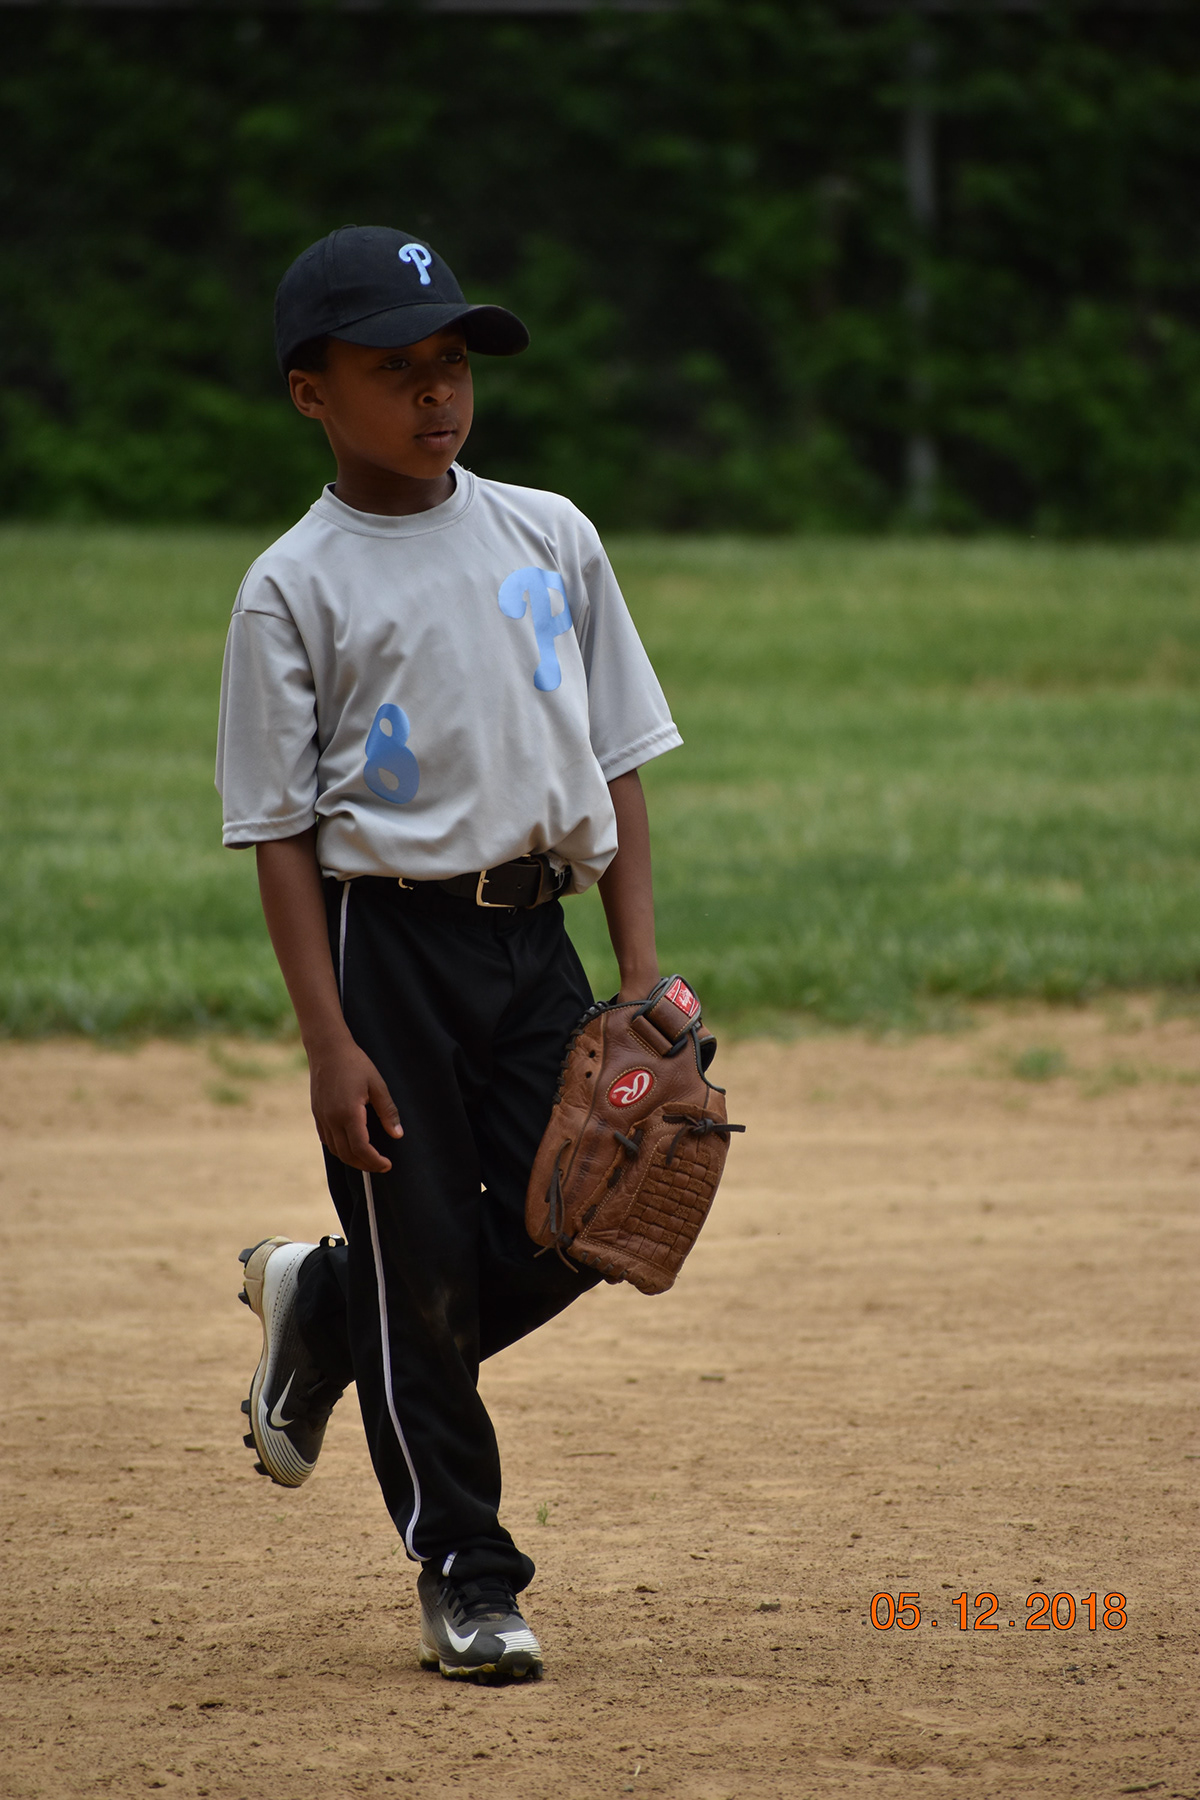 Adobe Portfolio baseball mound seeds sunflower summer pitcher base 1st 2nd 3rd home plate pitch Coach